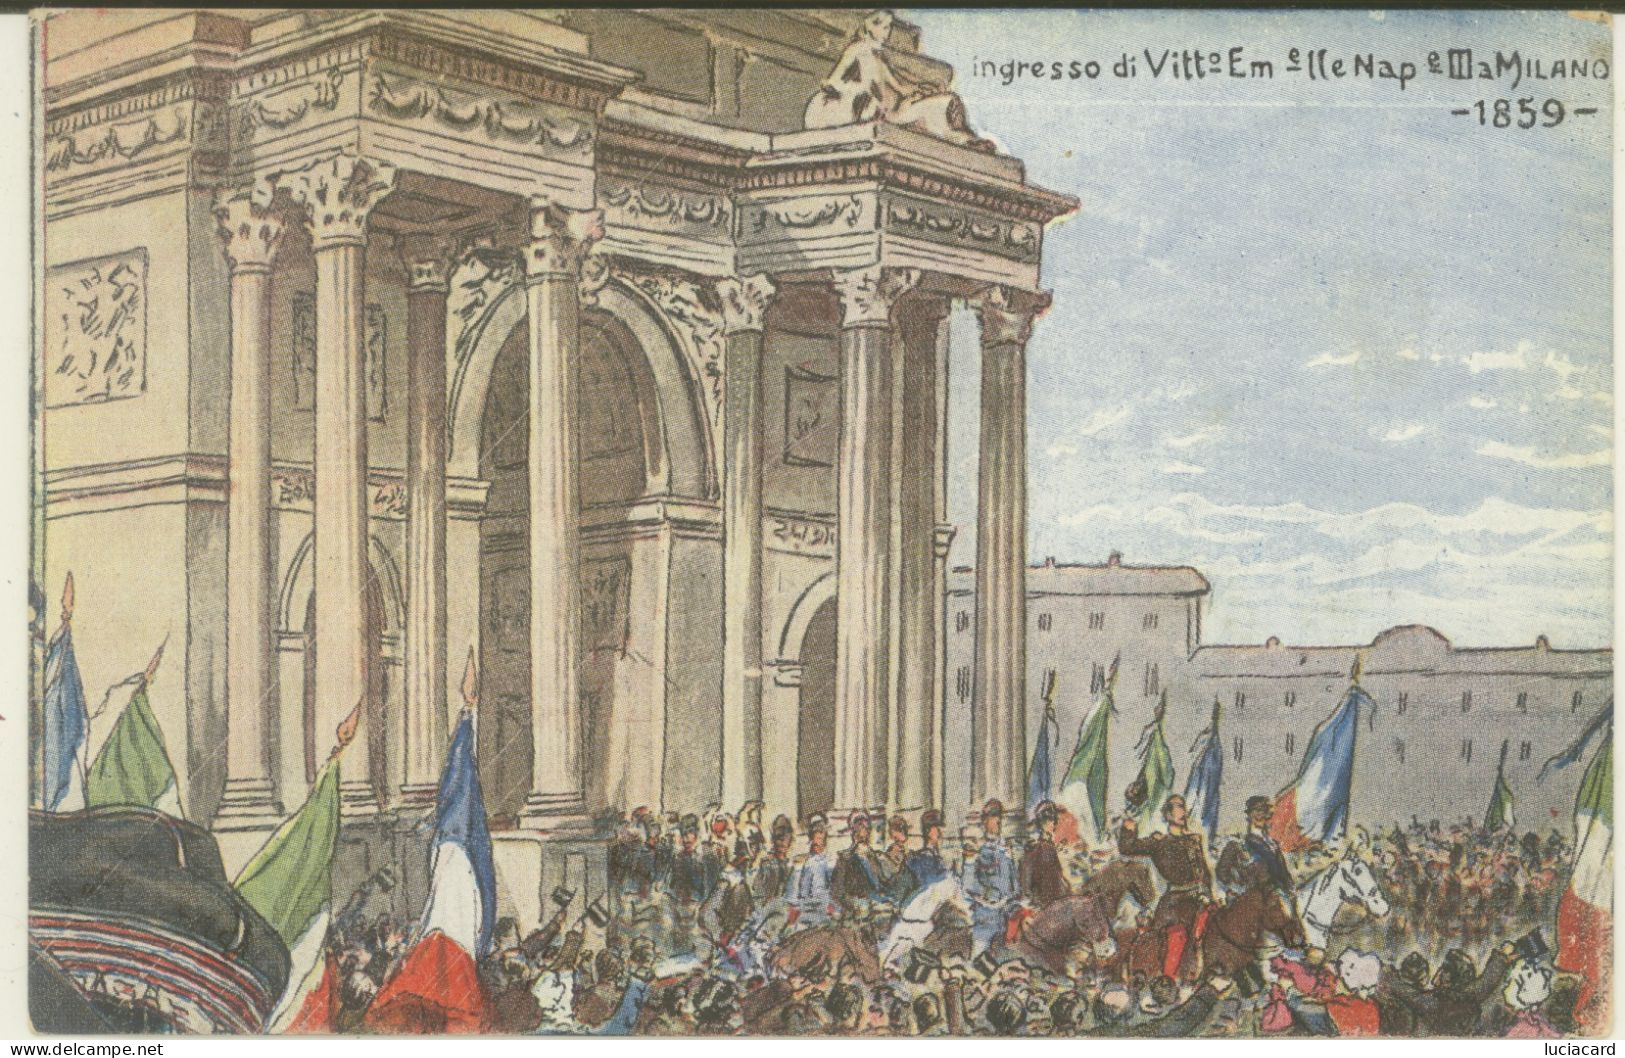 MILANO -INGRESSO DI VIITT. EMANUELE II E NAPOLEONE 1859 - Milano (Milan)